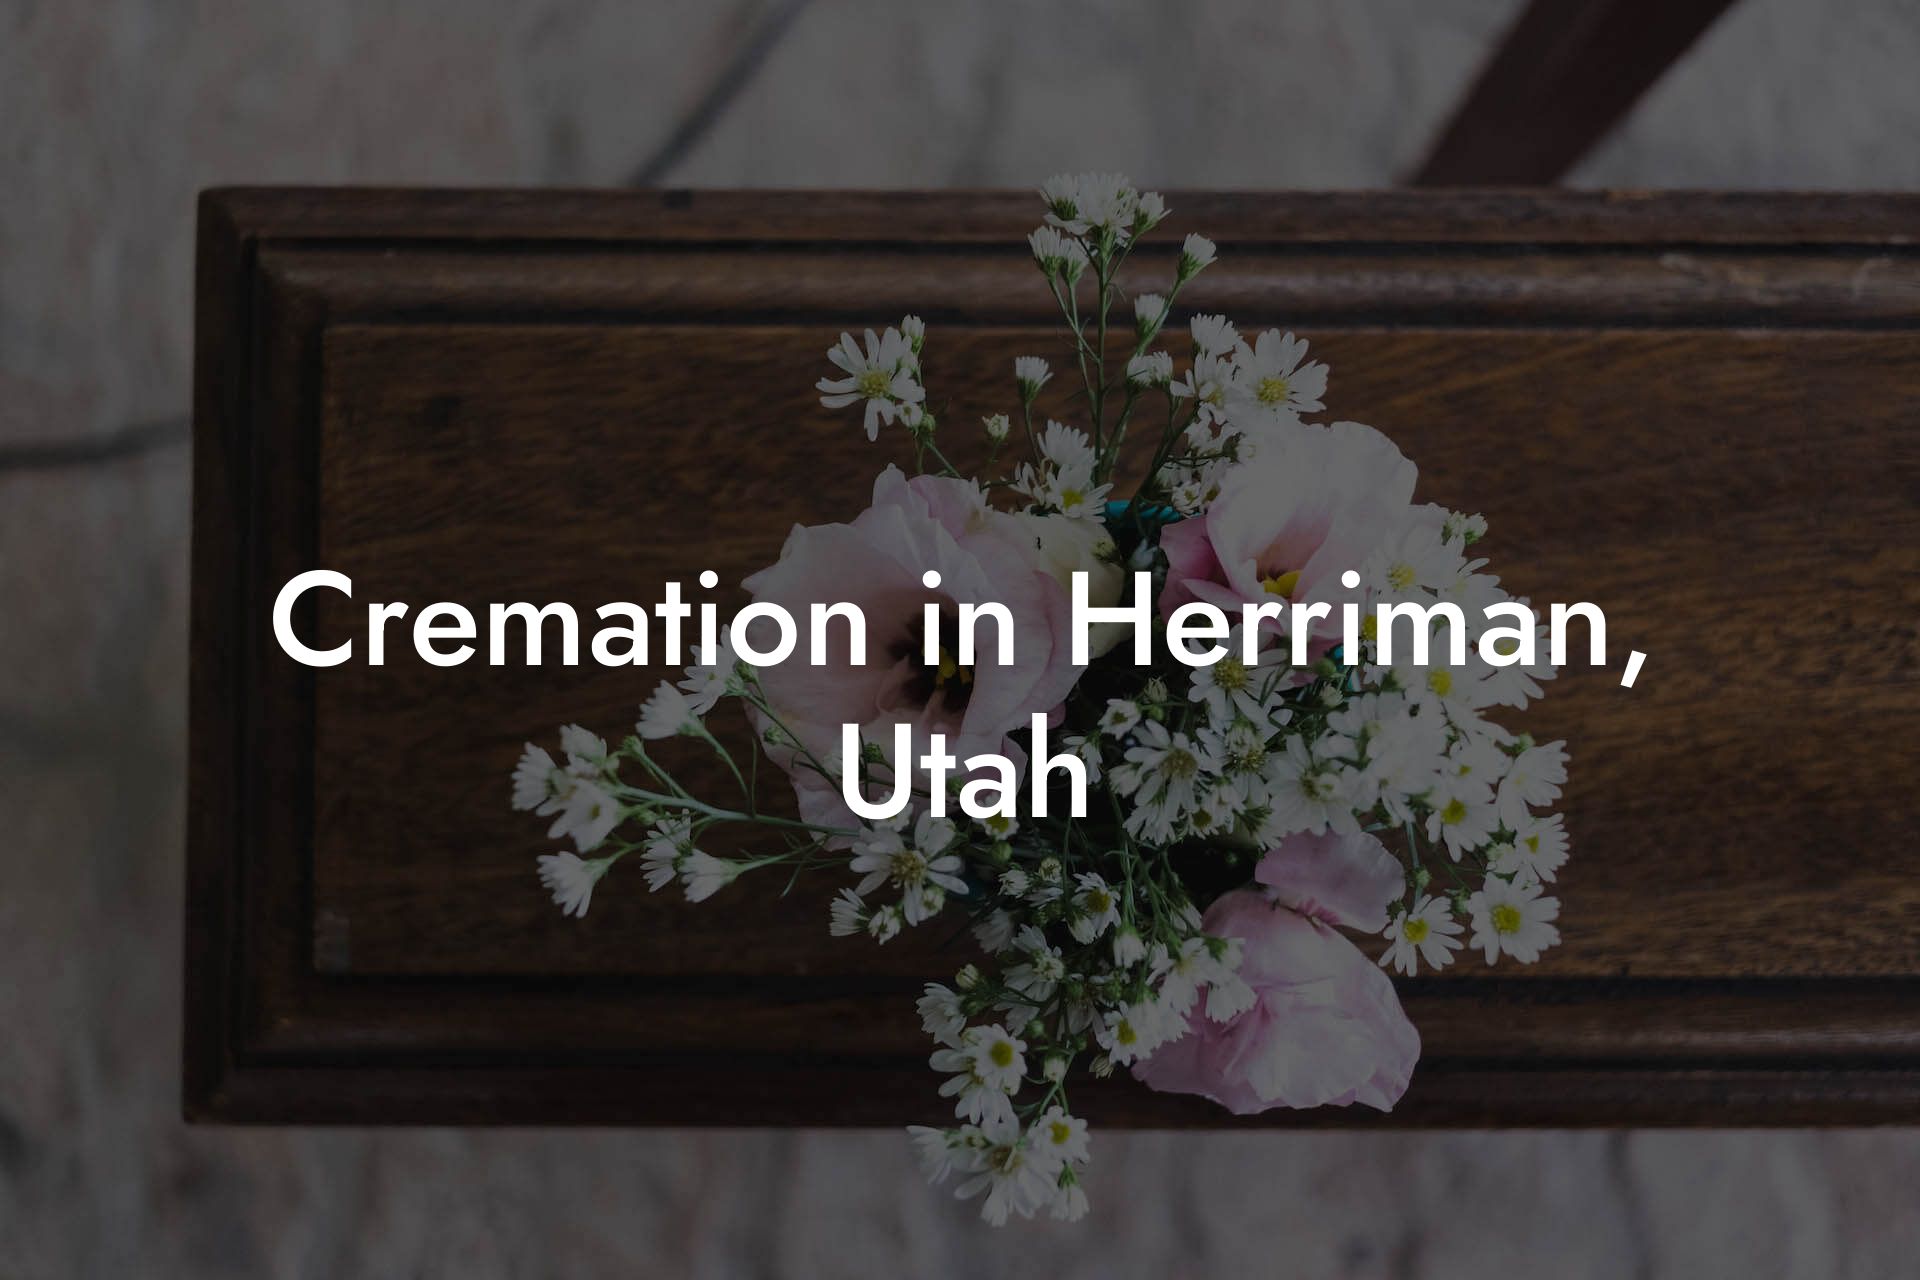 Cremation in Herriman, Utah